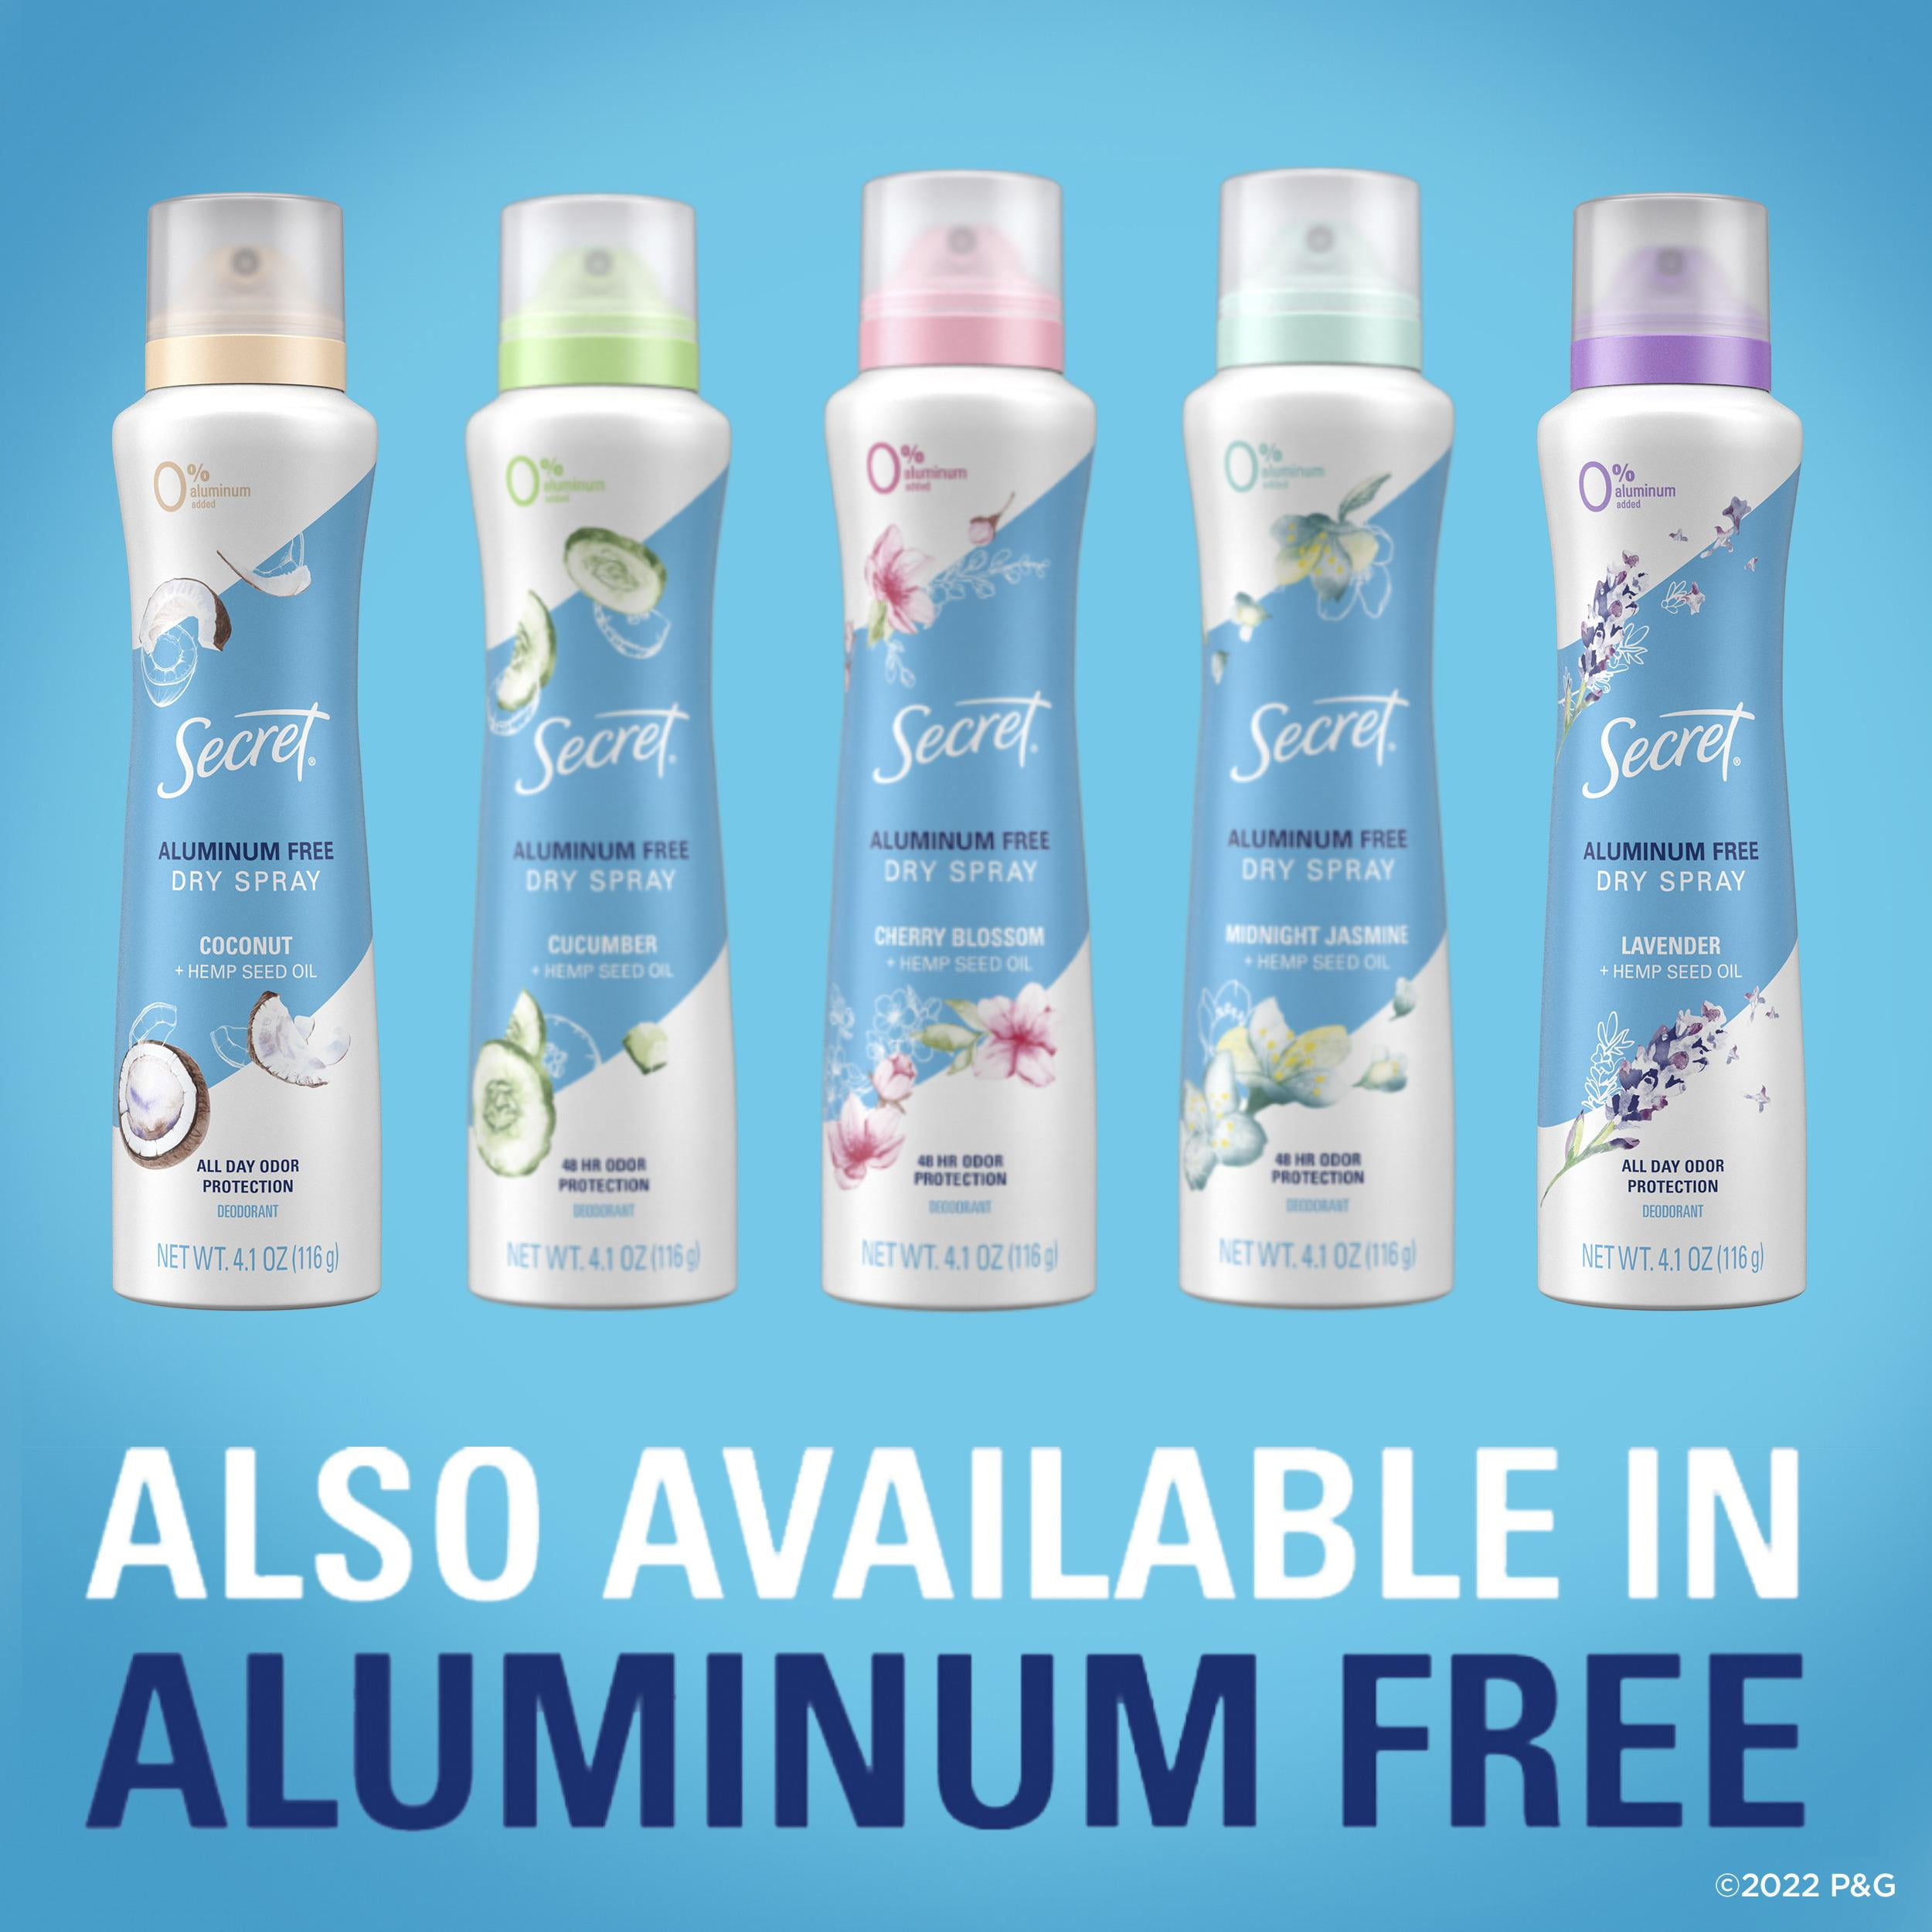 Secret Dry Spray Aluminum Free Deodorant for Women, Vanilla and Argan Oil,  4.1 oz Twin Pack 